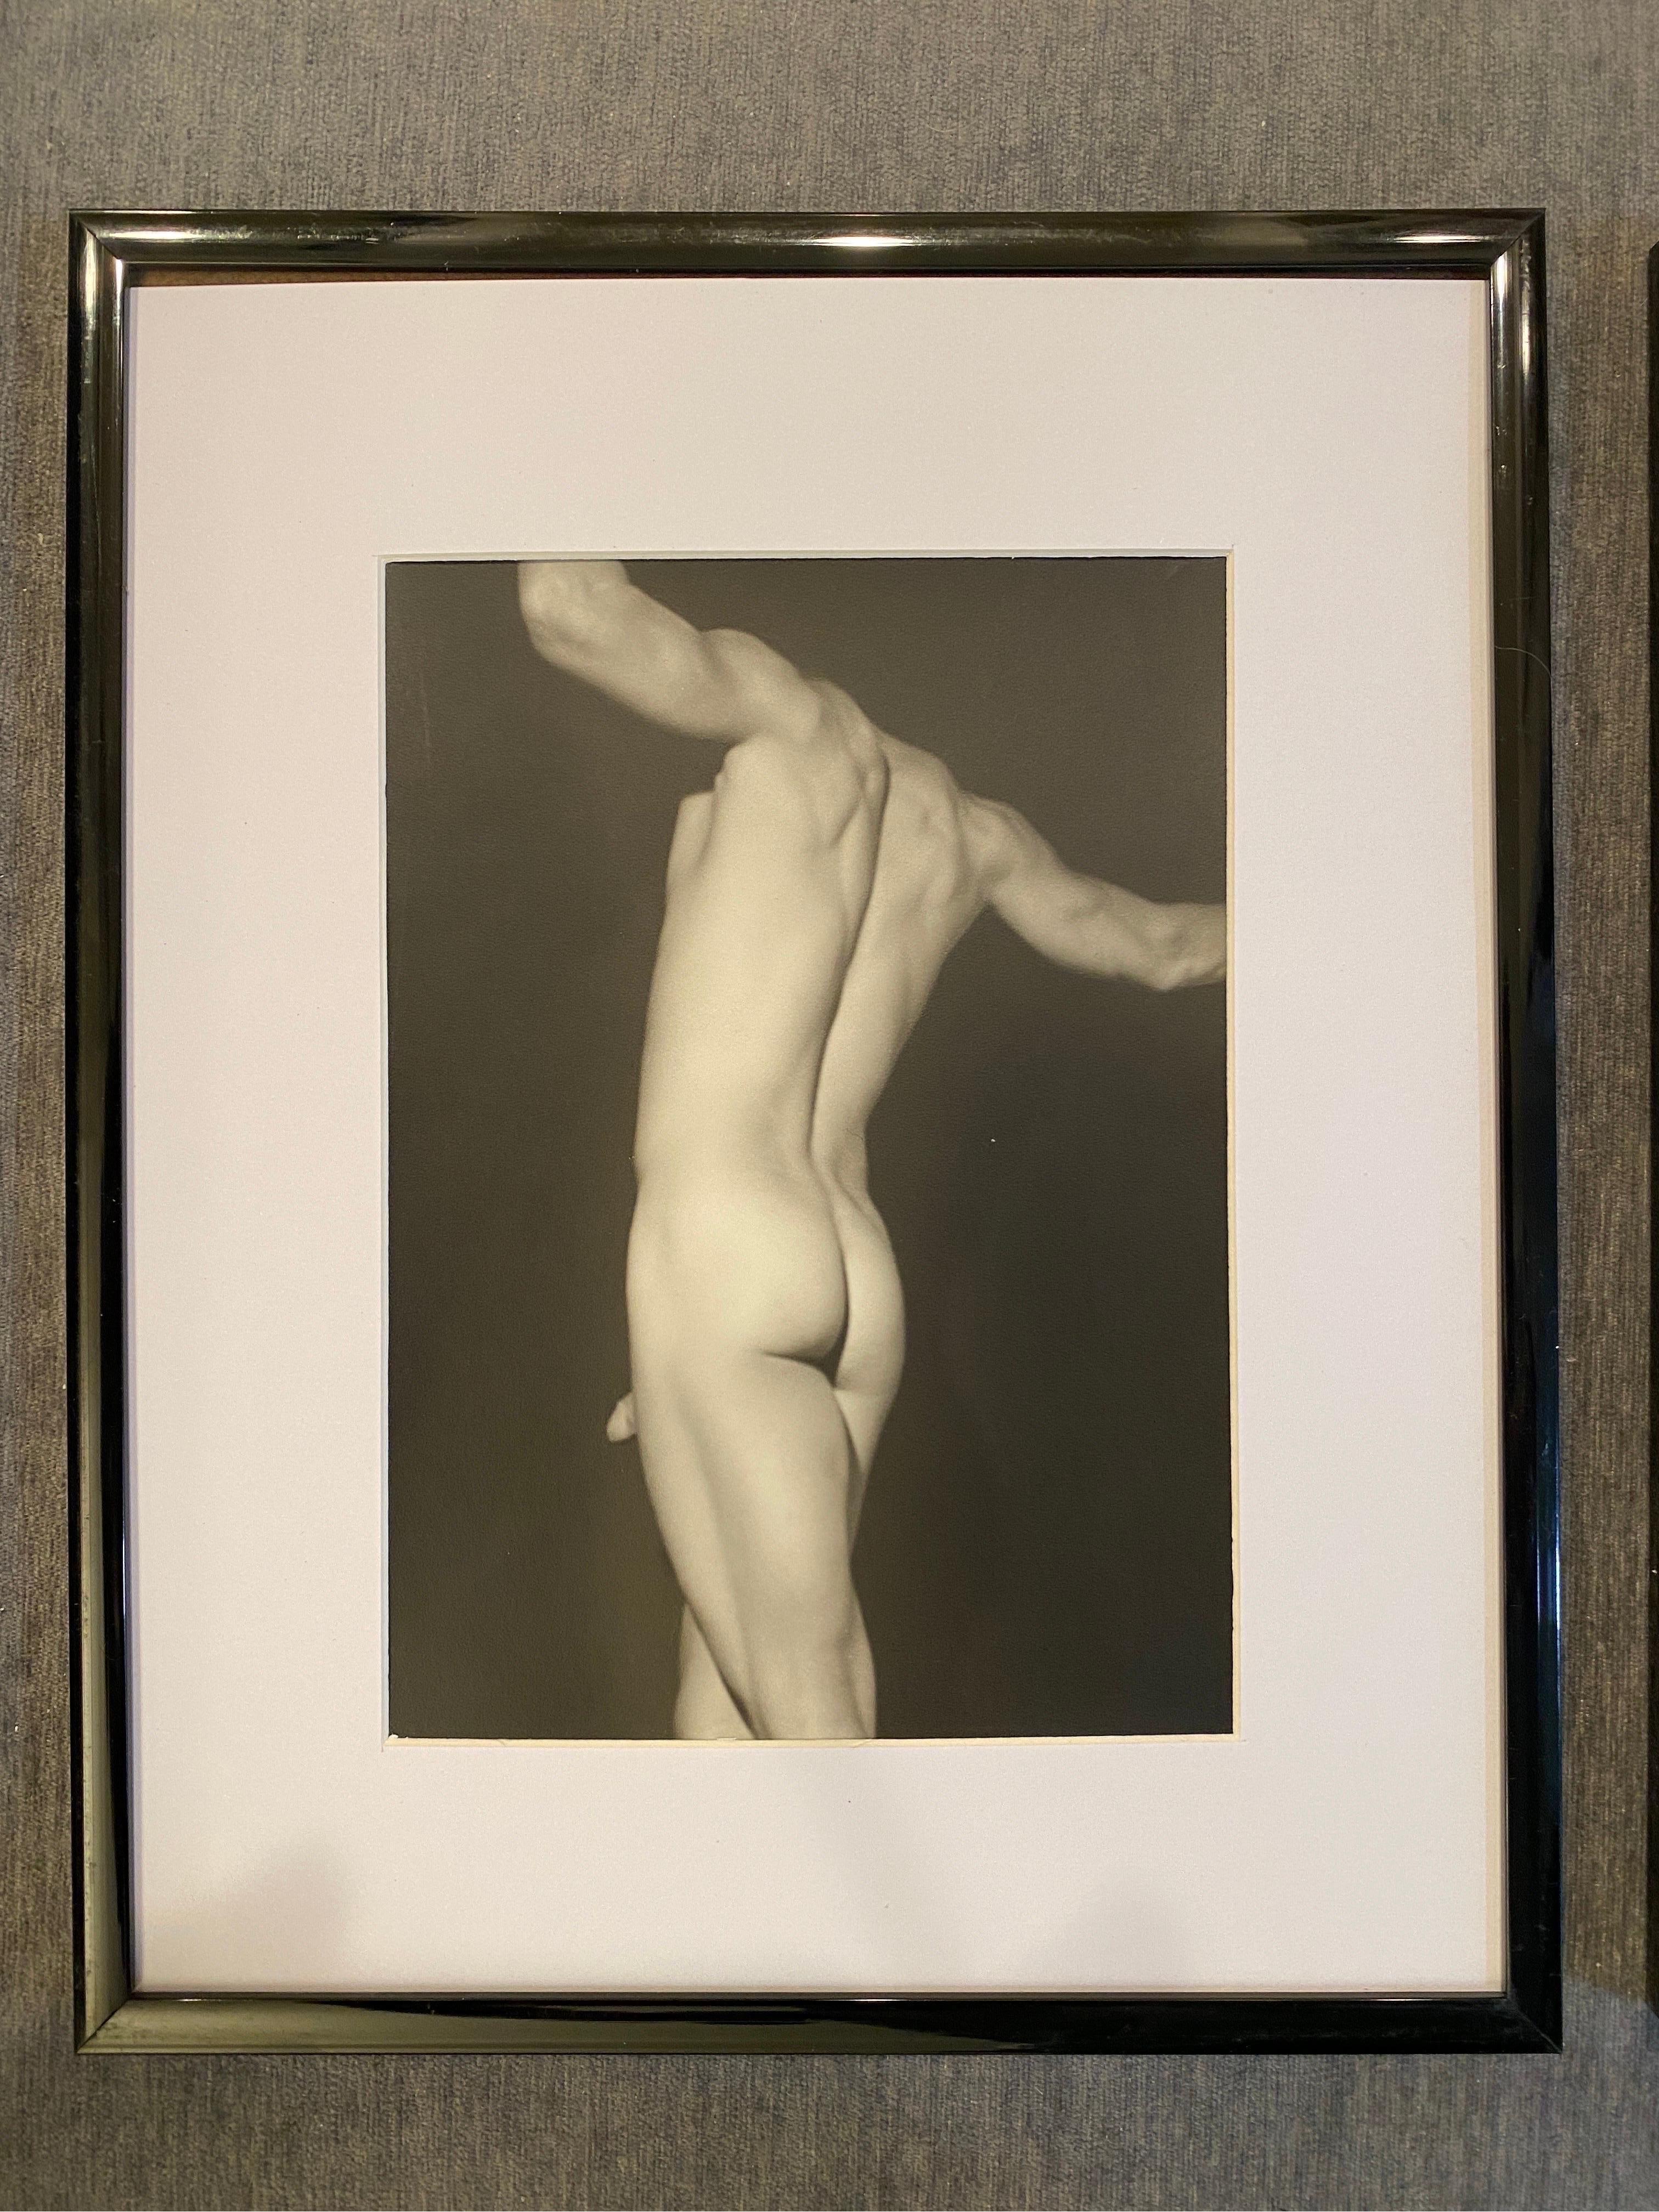 American Pair of Original B&W Male Nude Silver Gelatin Photographs 1996 by George Machado For Sale